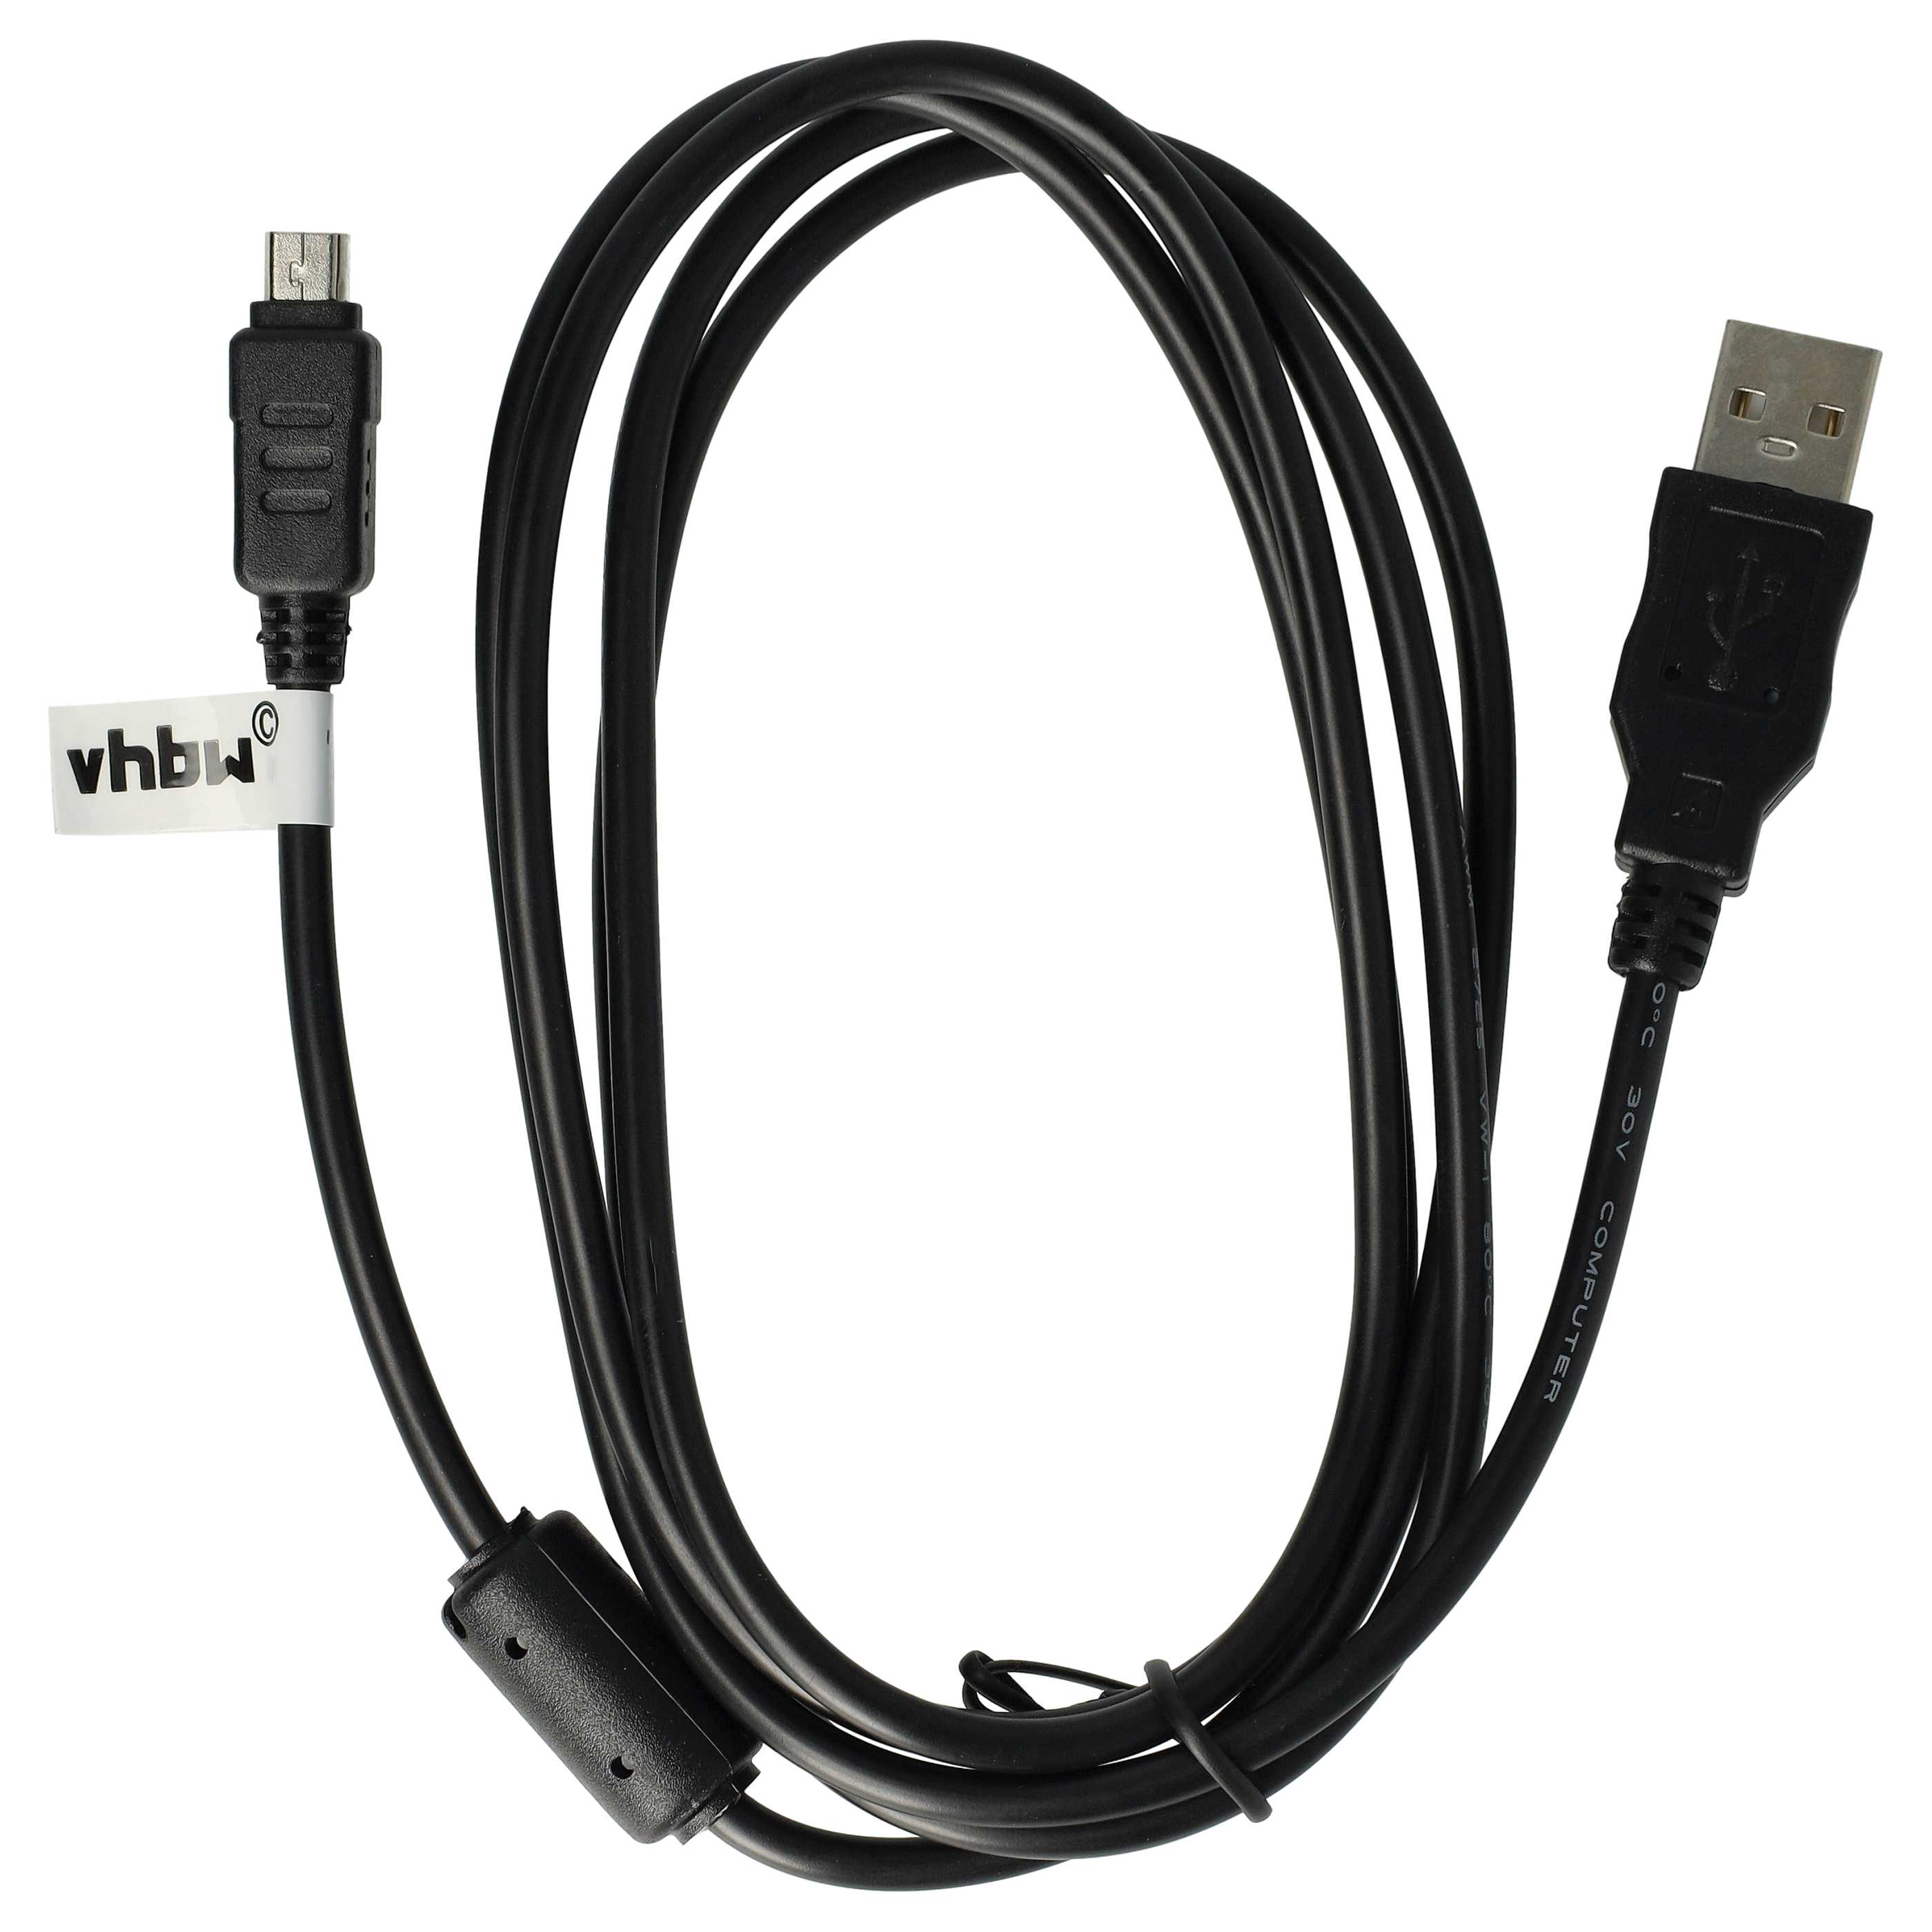 USB Datenkabel als Ersatz für Olympus CB-USB6, CB-USB5, CB-USB8 für Kamera - 150 cm